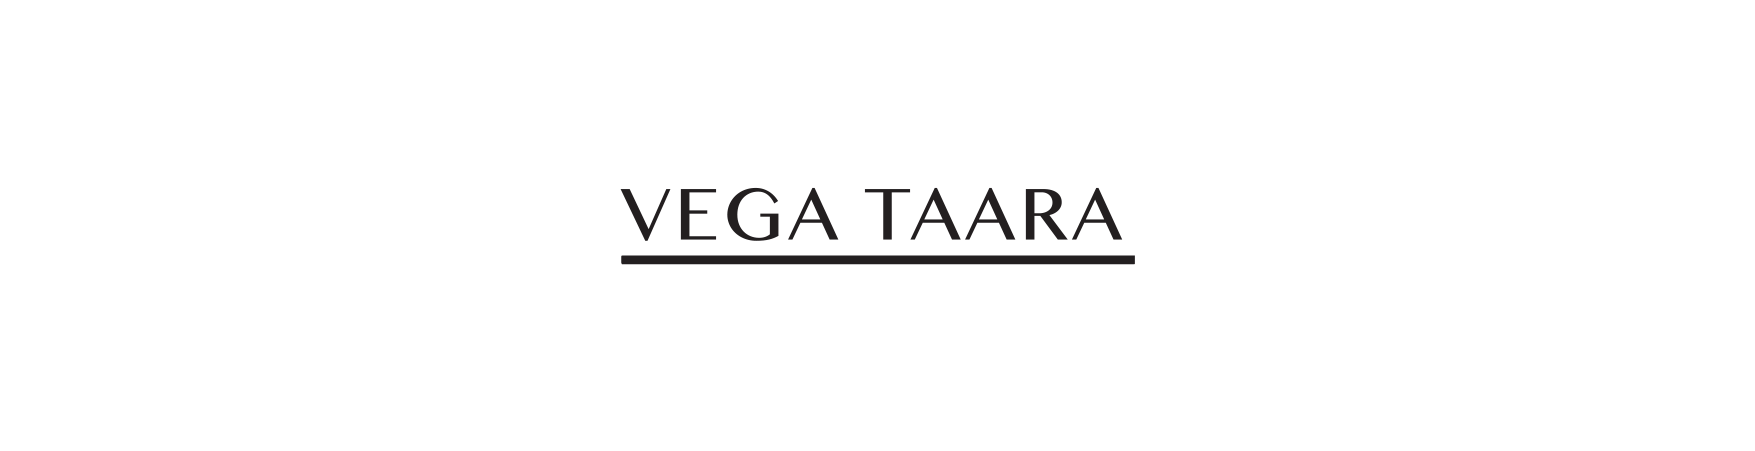 فيغا تارا